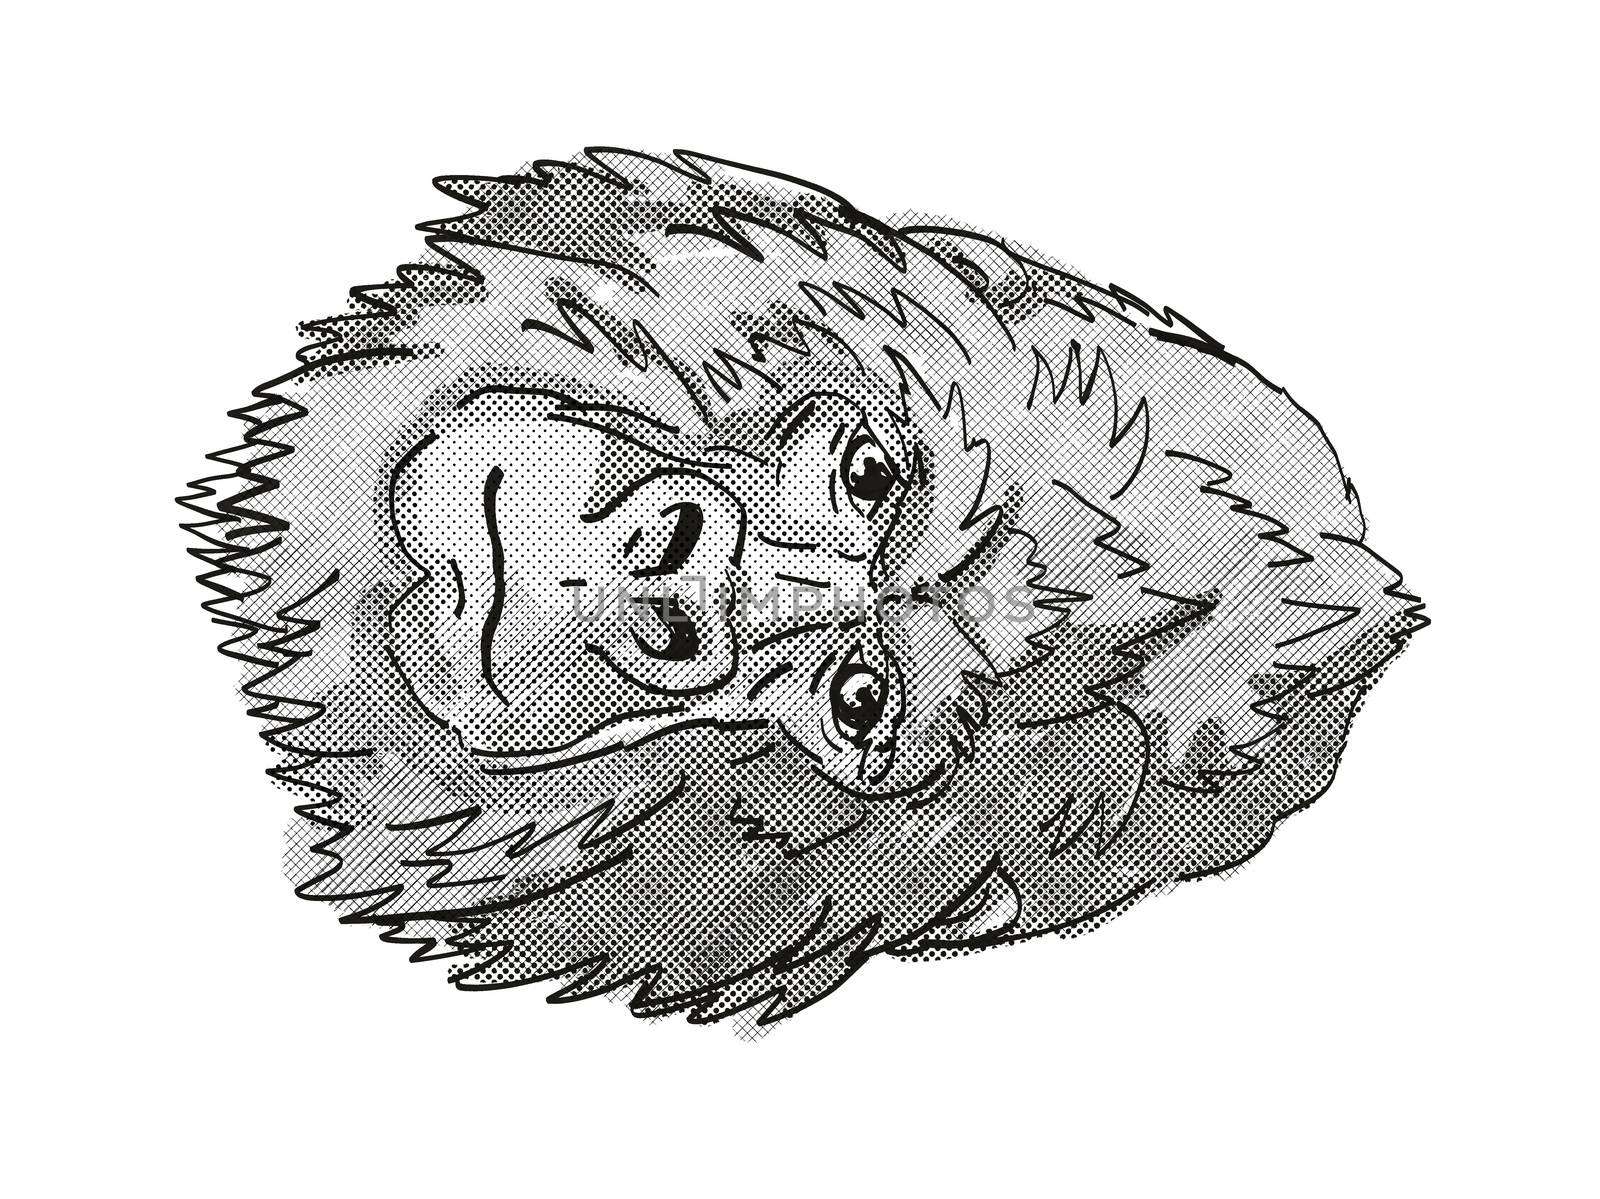 Silver Back or Mountain Gorilla Cartoon Retro Drawing by patrimonio